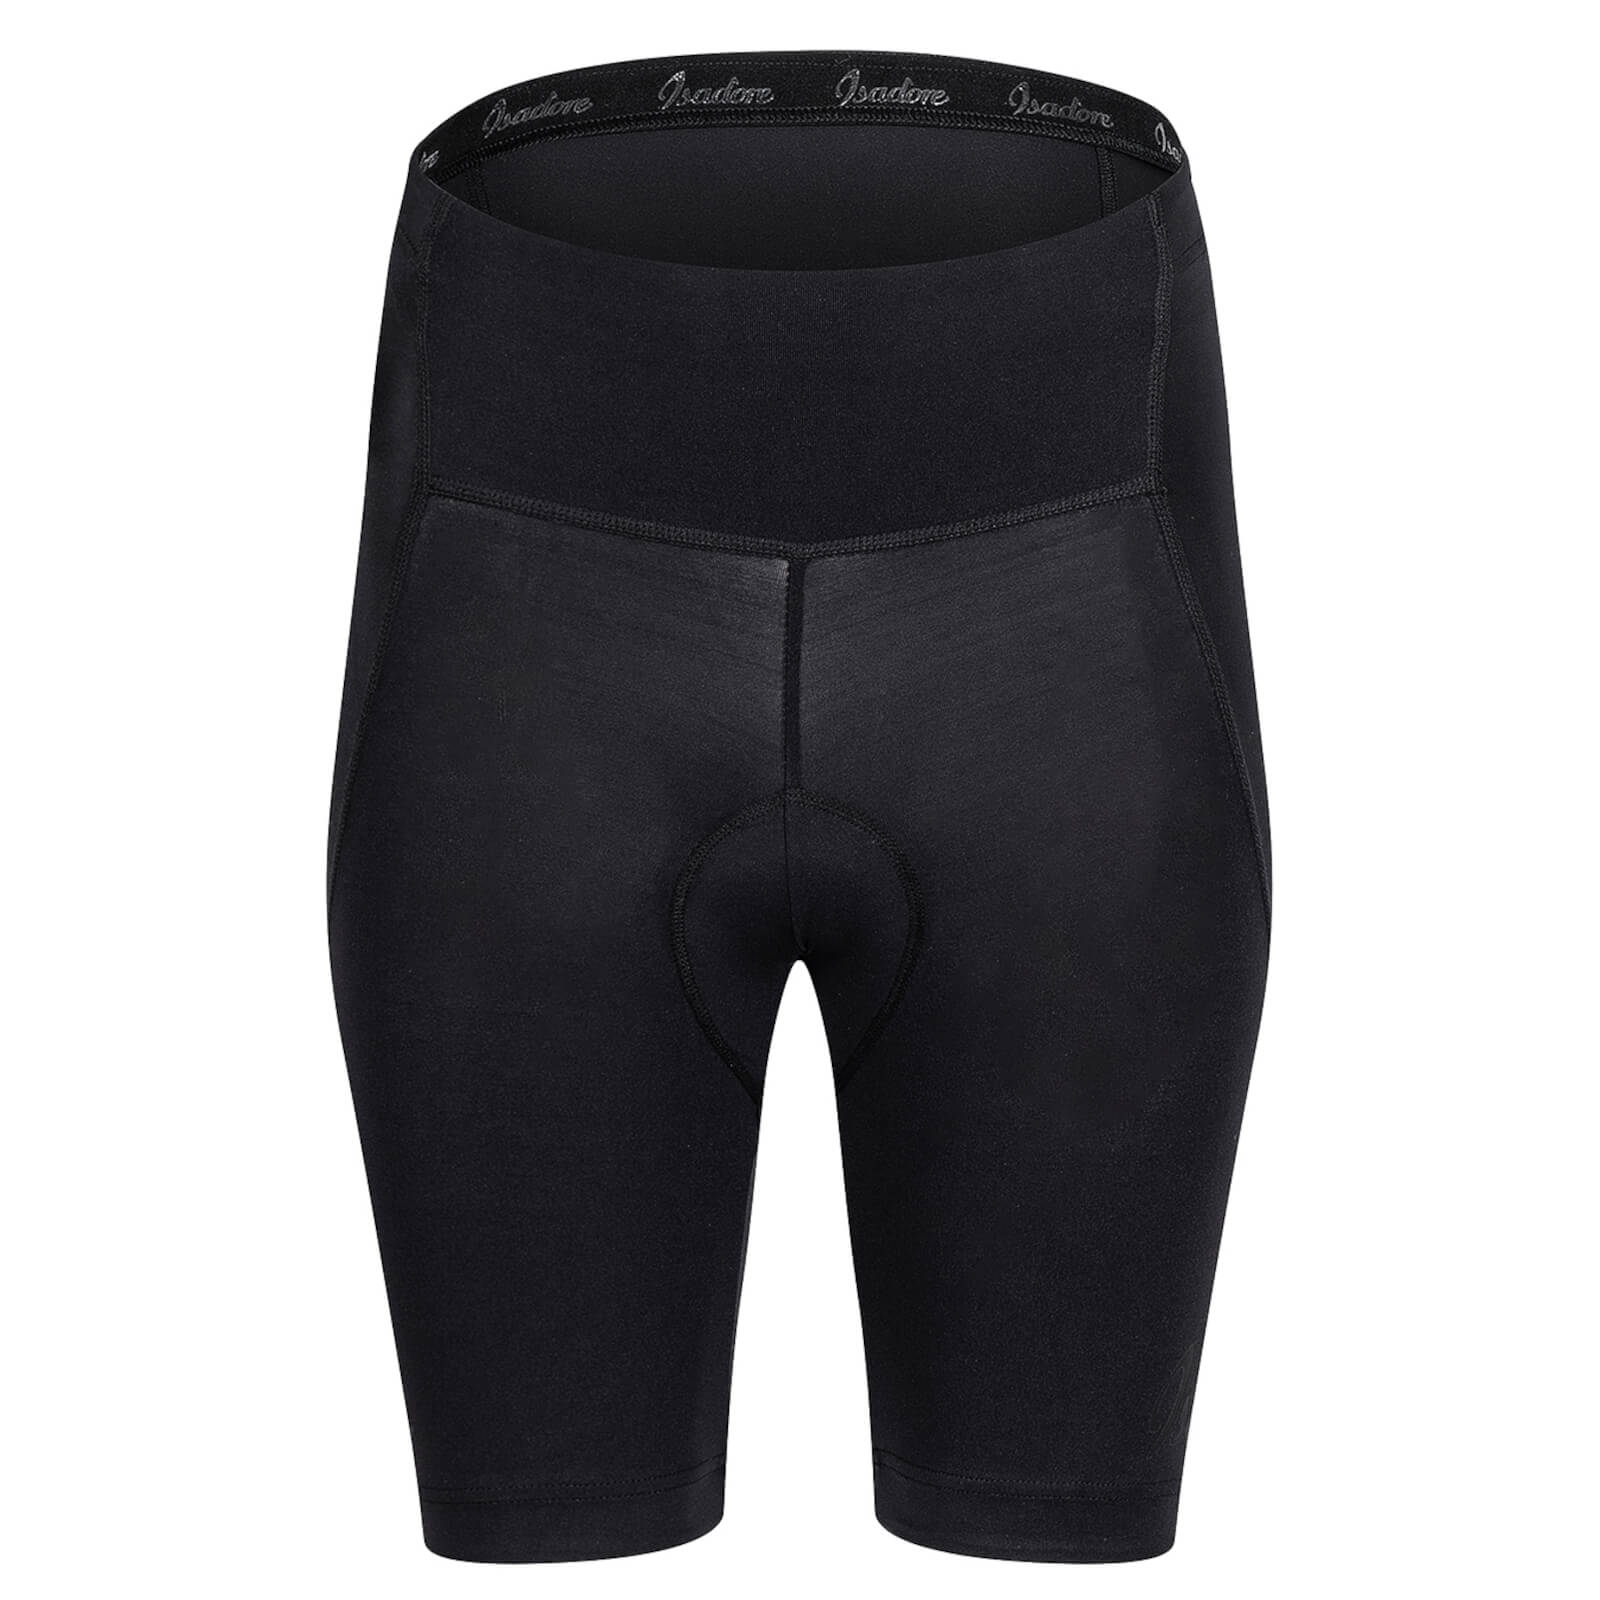 Isadore Debut Women's Bib Shorts - XL - Black